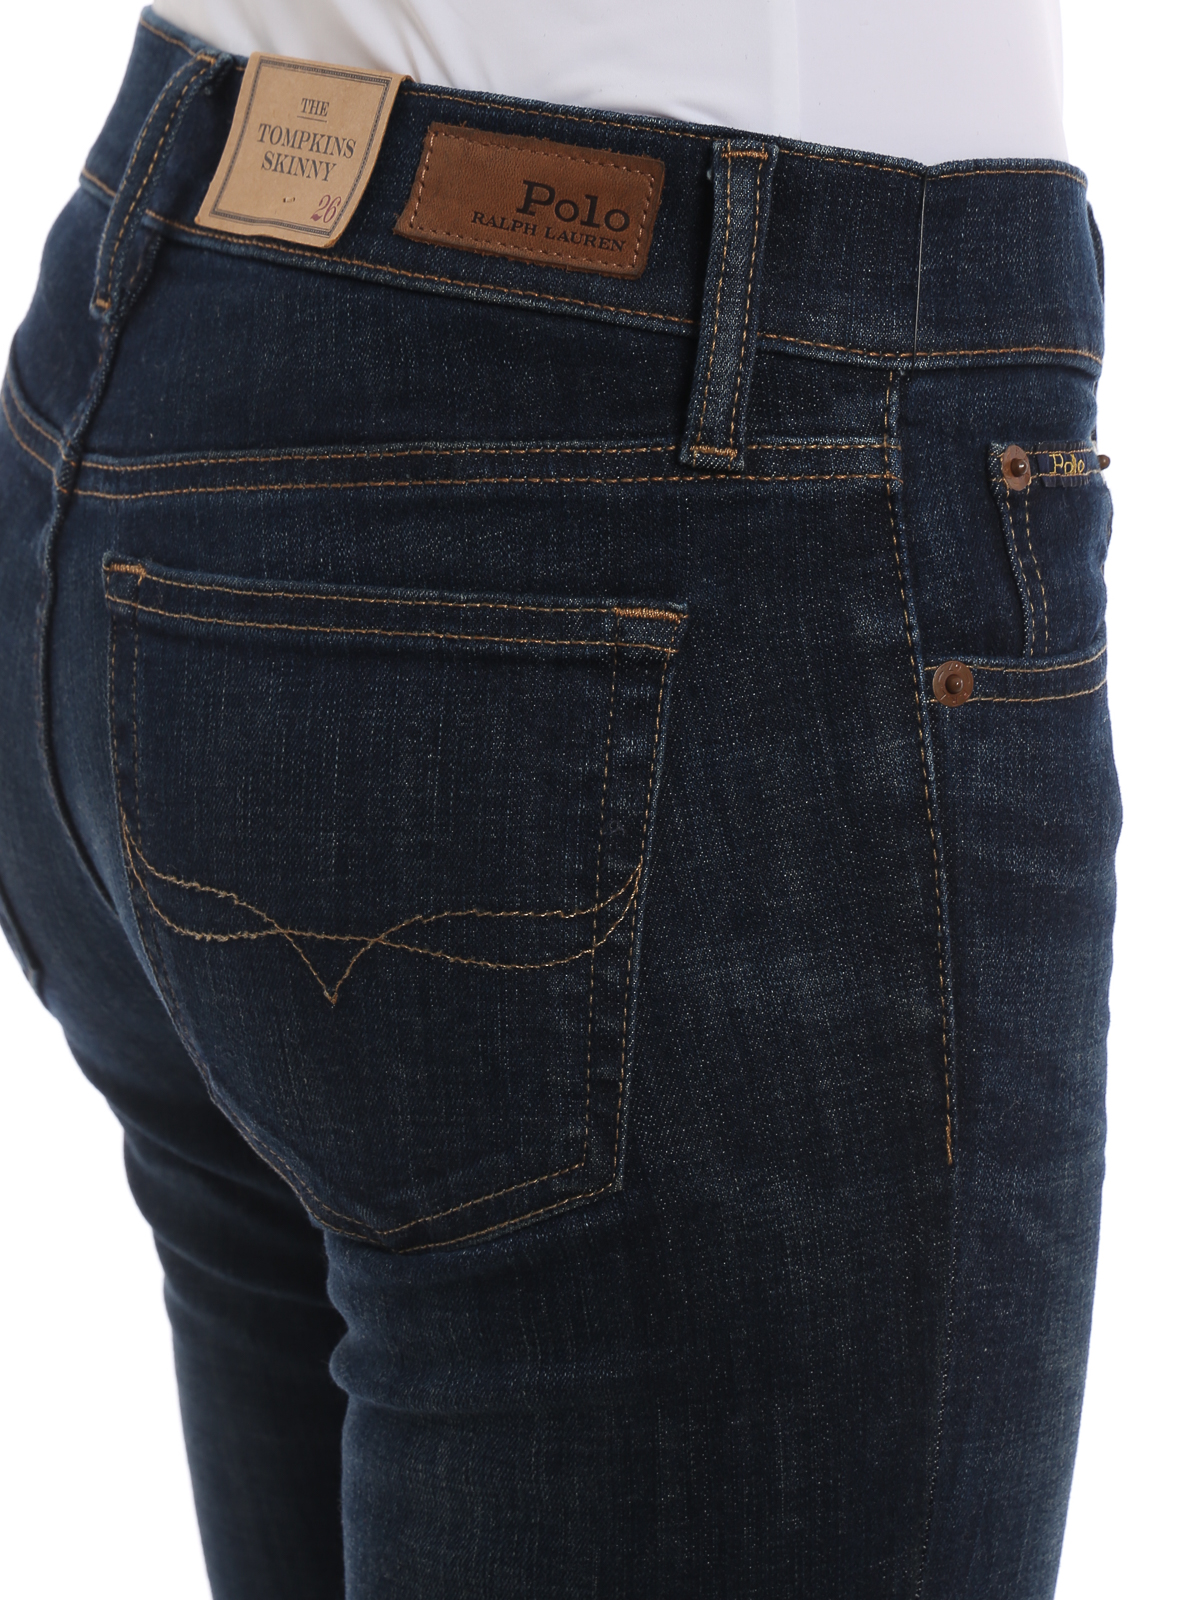 præambel Clancy international Skinny jeans Polo Ralph Lauren - The Tompkins cotton denim skinny jeans -  211704109001